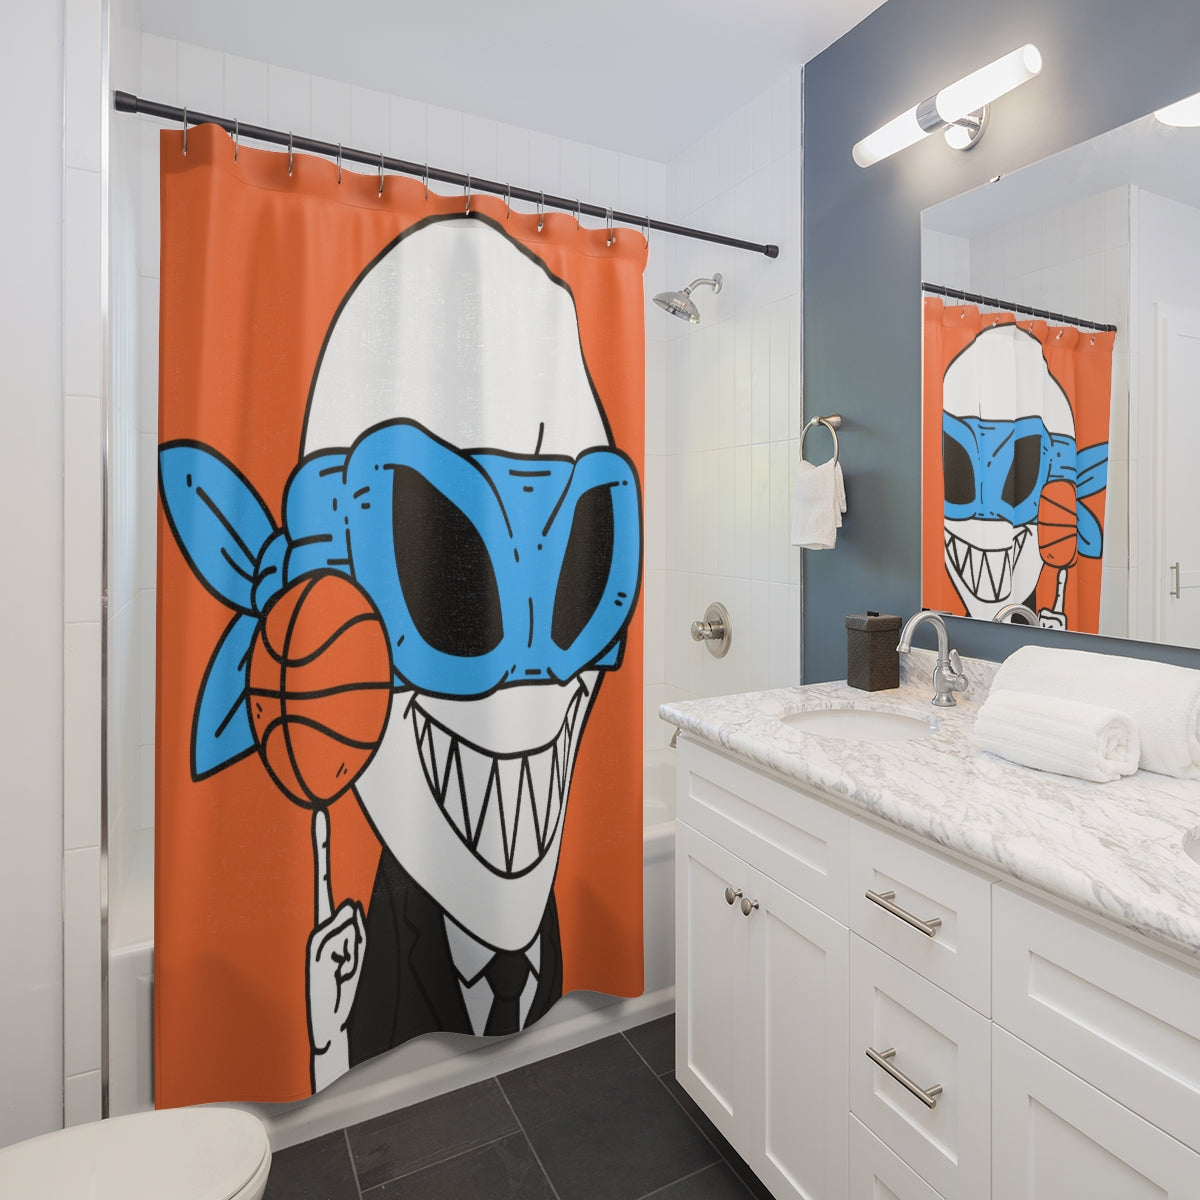 Alien BBall Sport Ninja Mask Big Smile Teeth Game Player Orange Basketball Shower Curtains